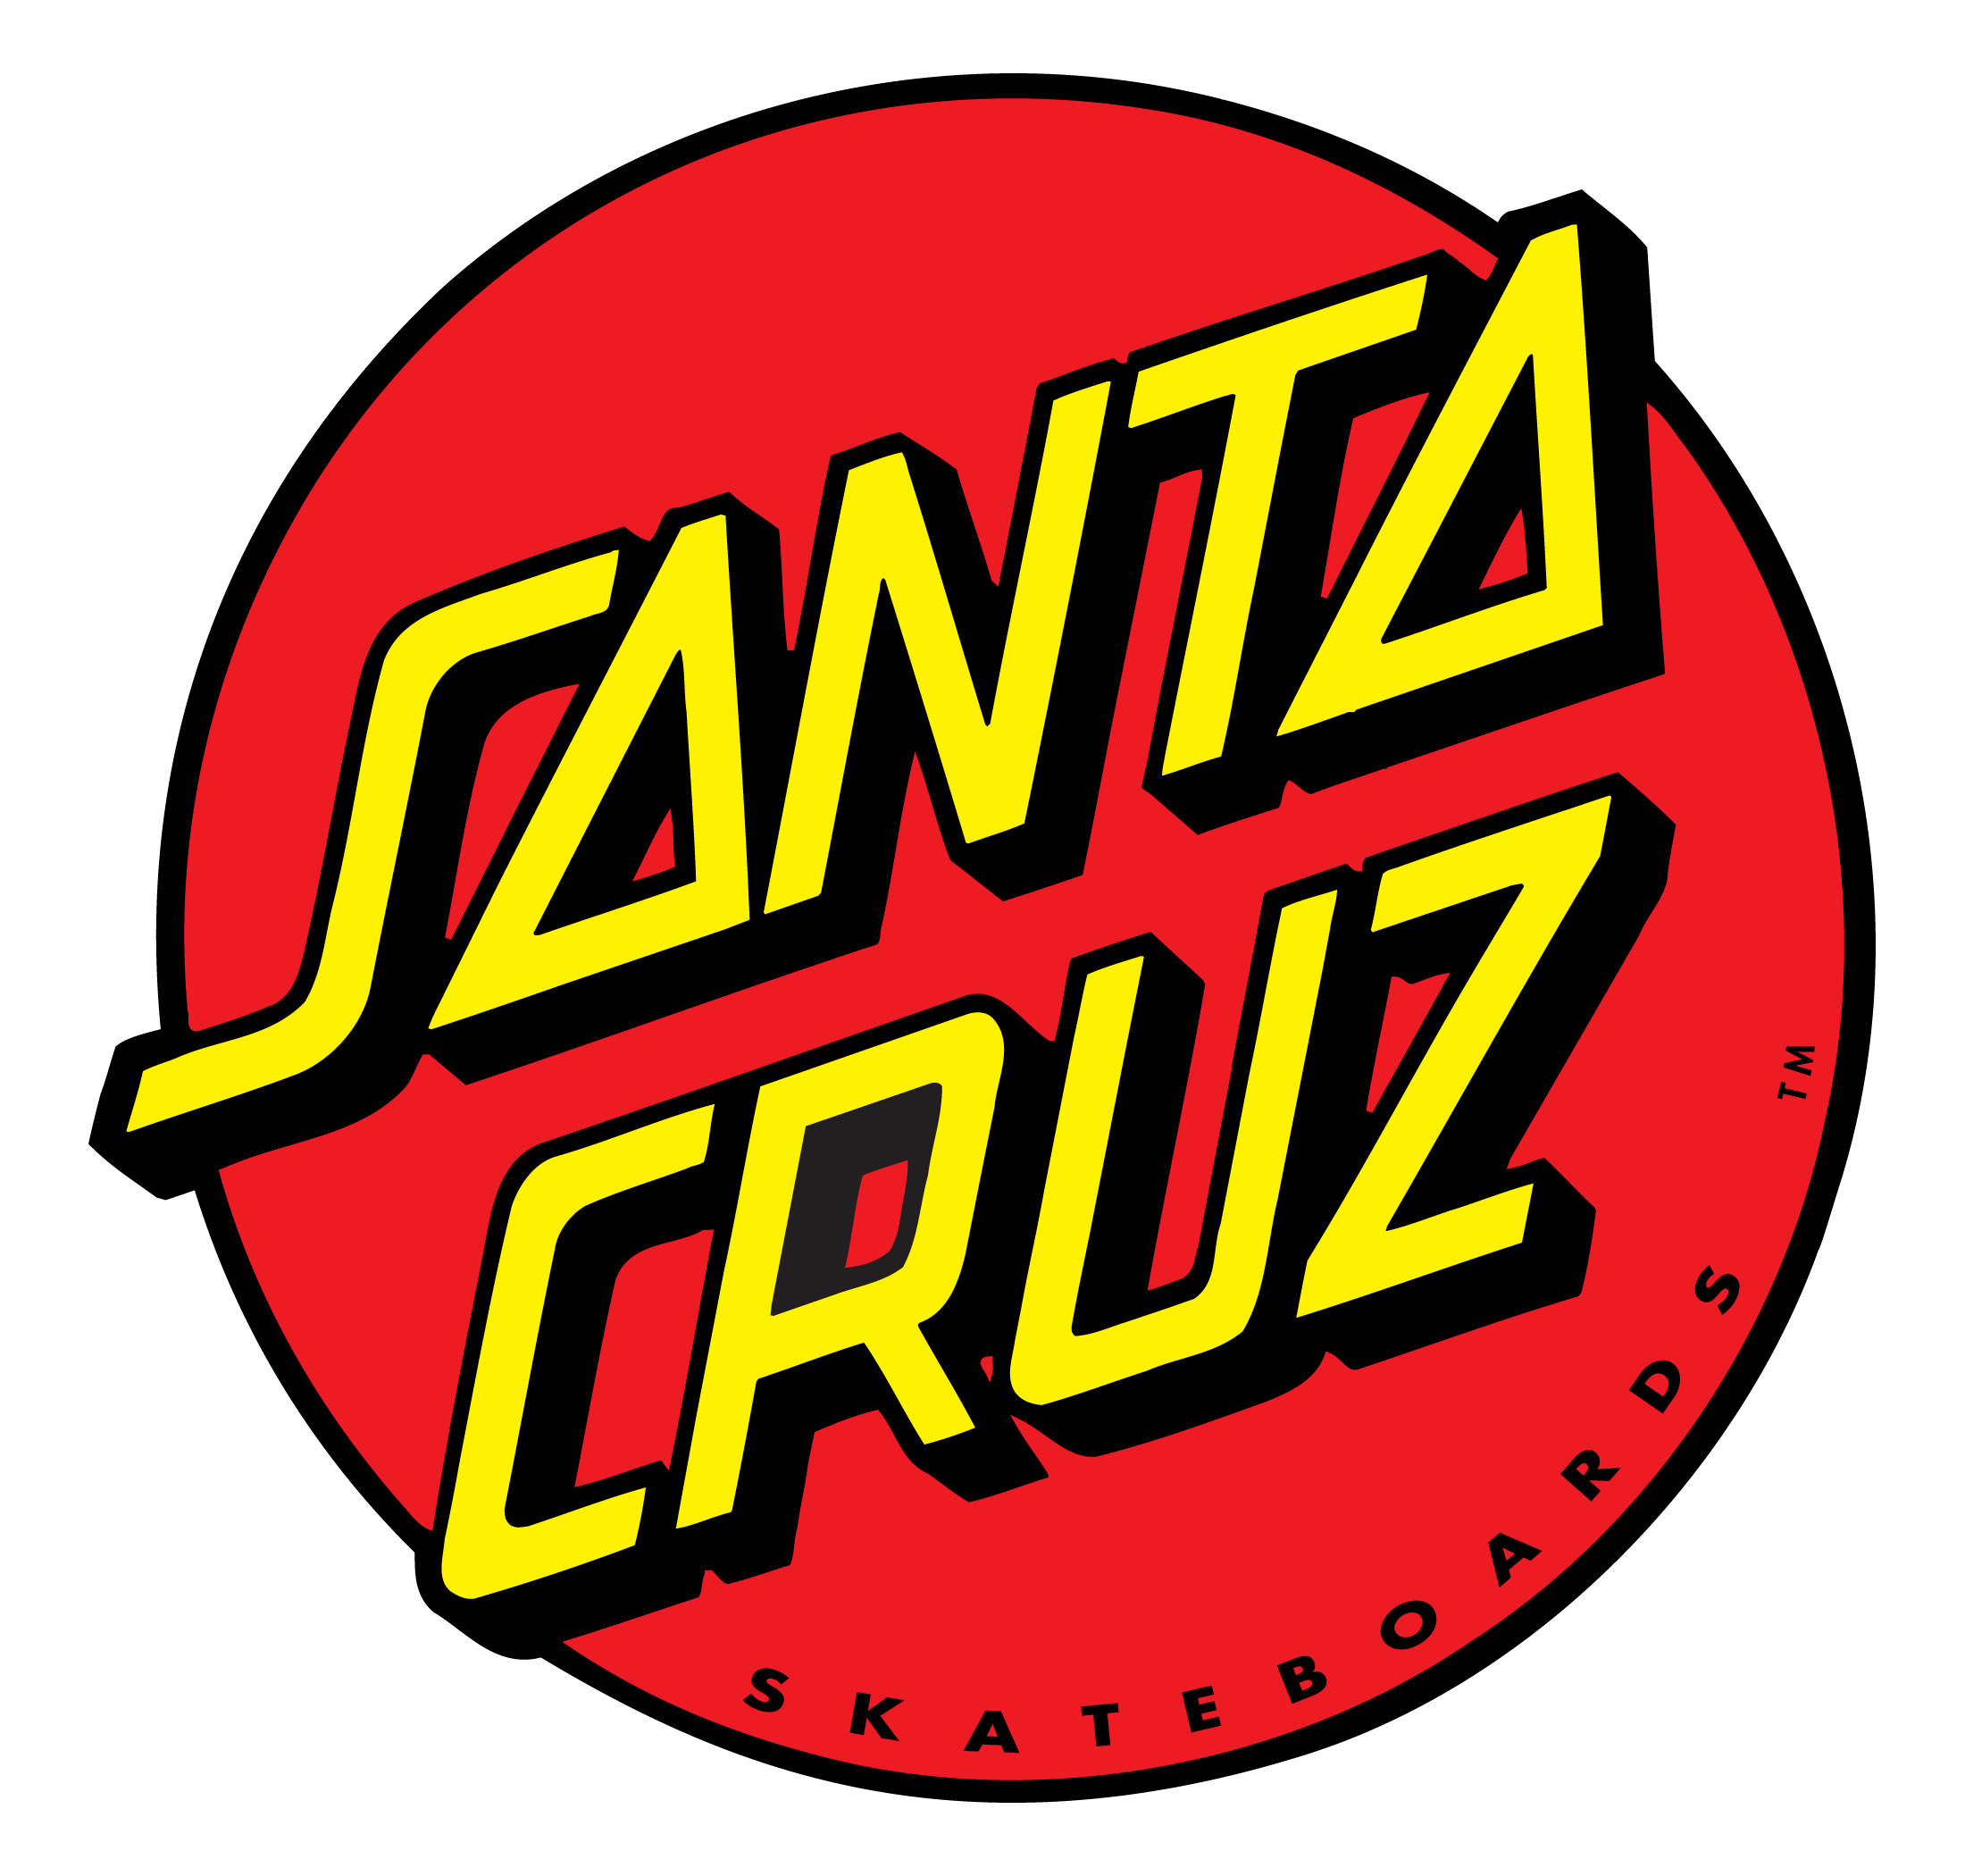 Santa Cruz 